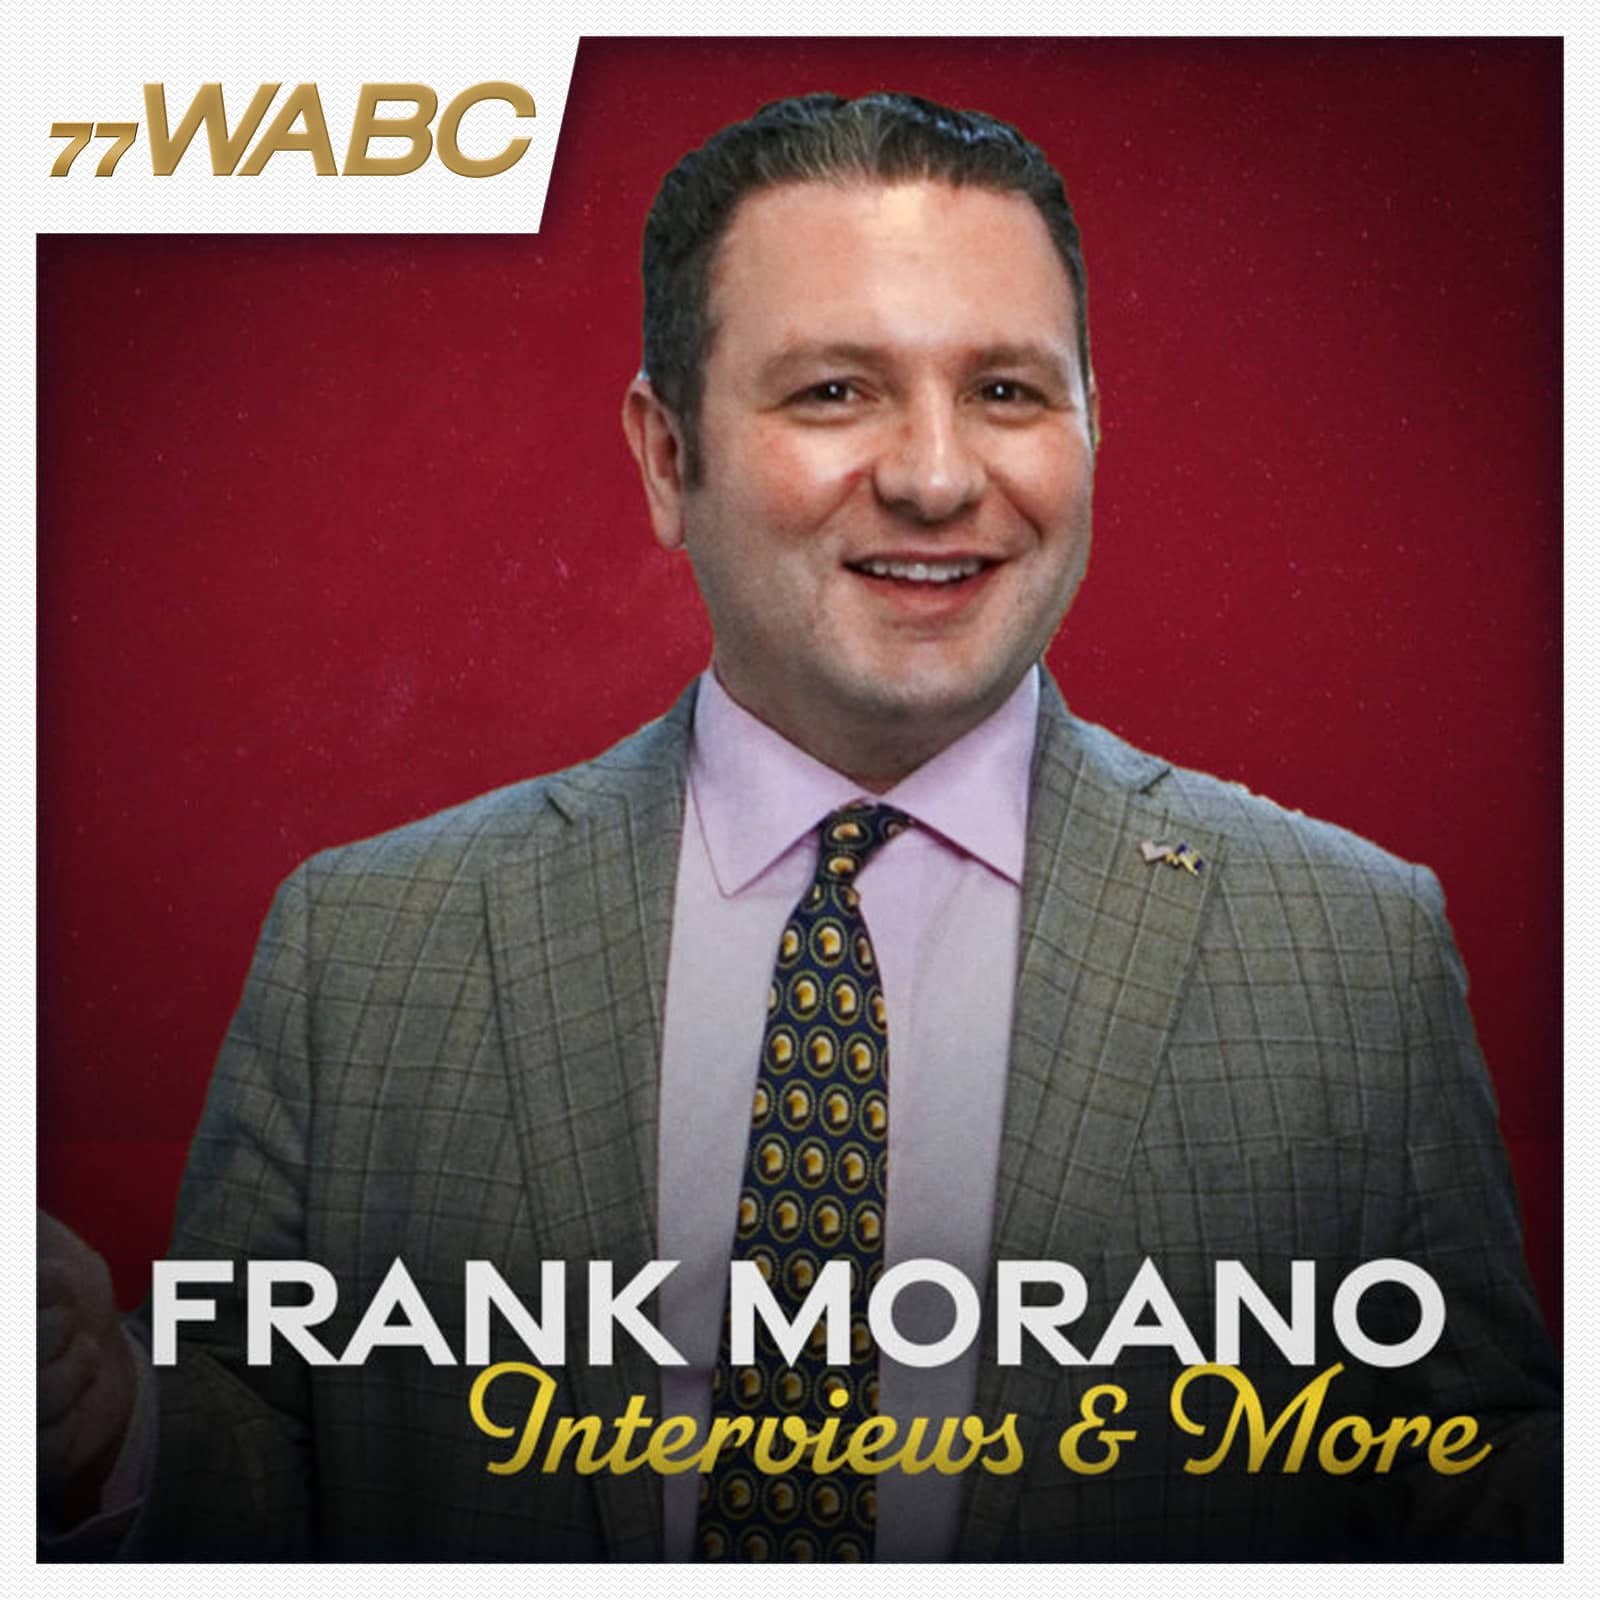 frank-morano-interviews-and-more-podcast-new-logo995941